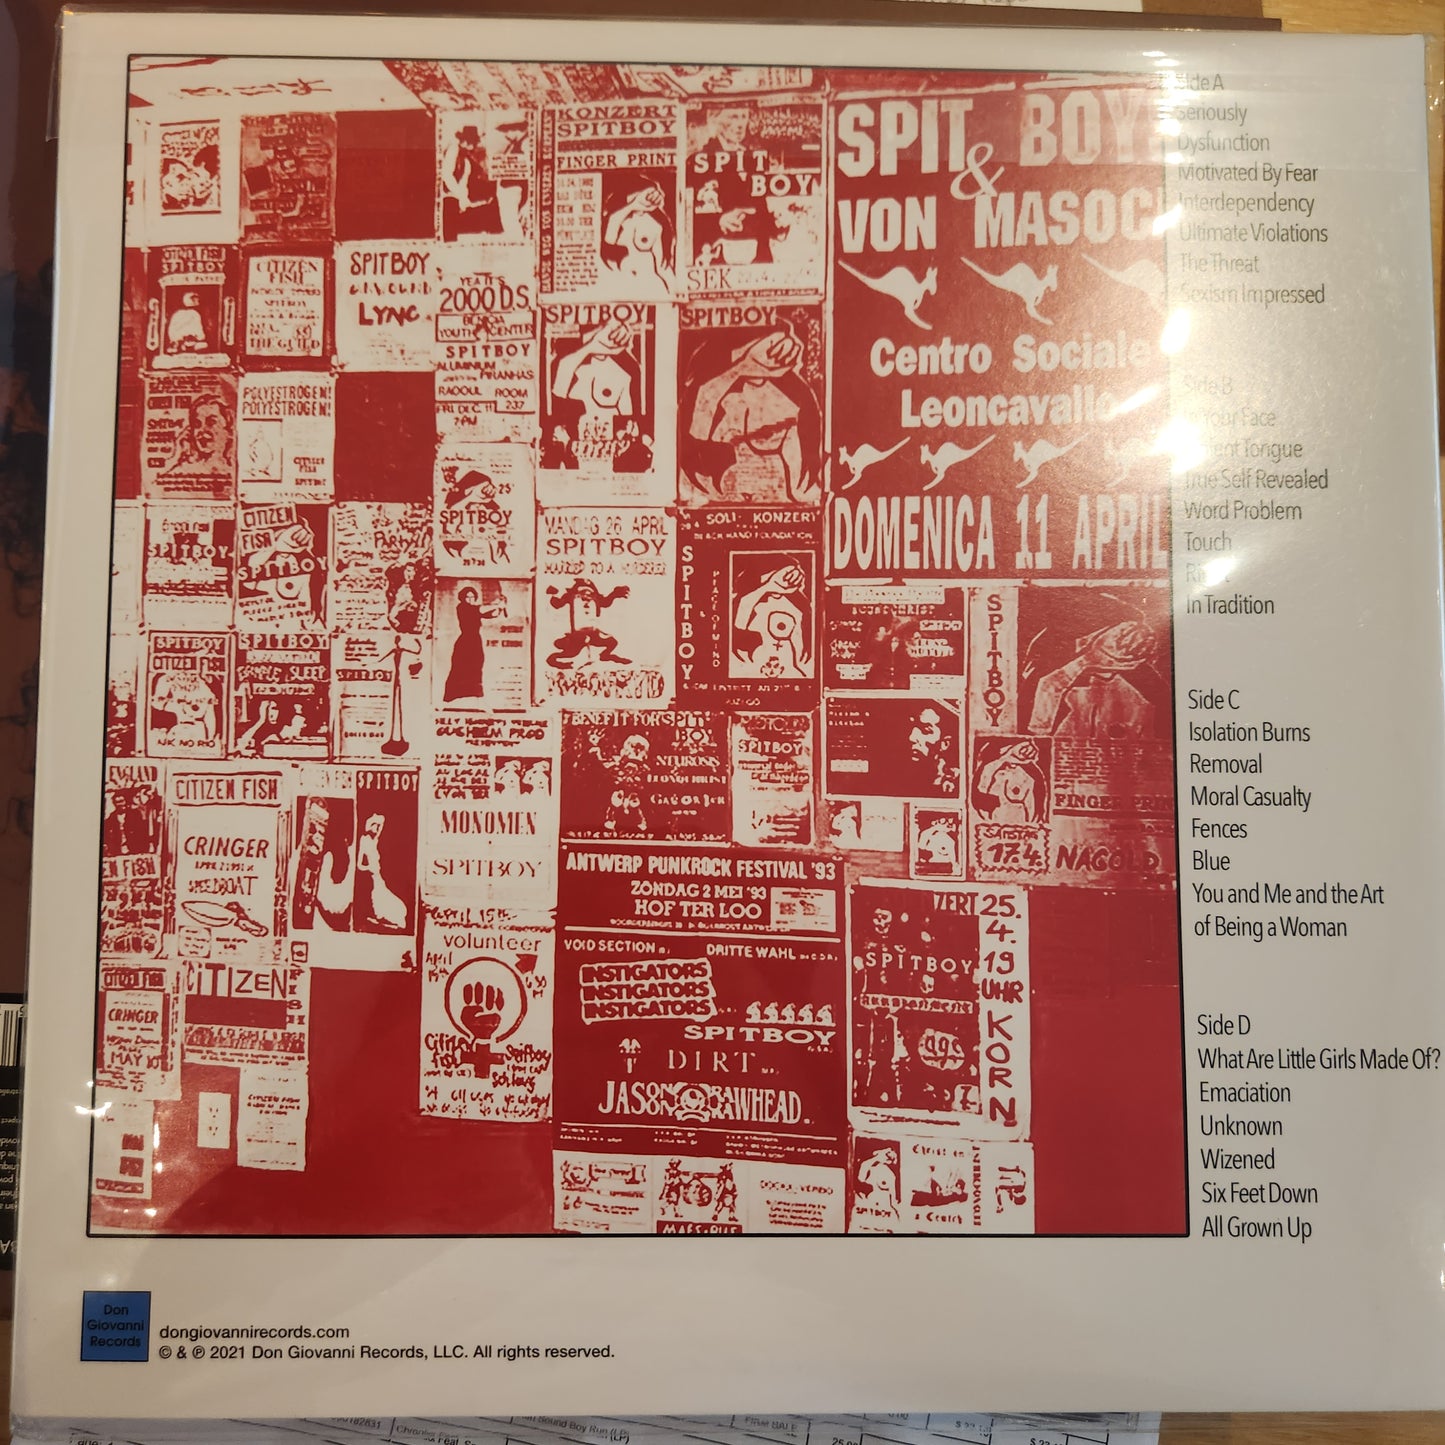 Spitboy - Body Of Work (RED & BLACK MARBLE VINYL) (2LP Red/Black Marble Vinyl)